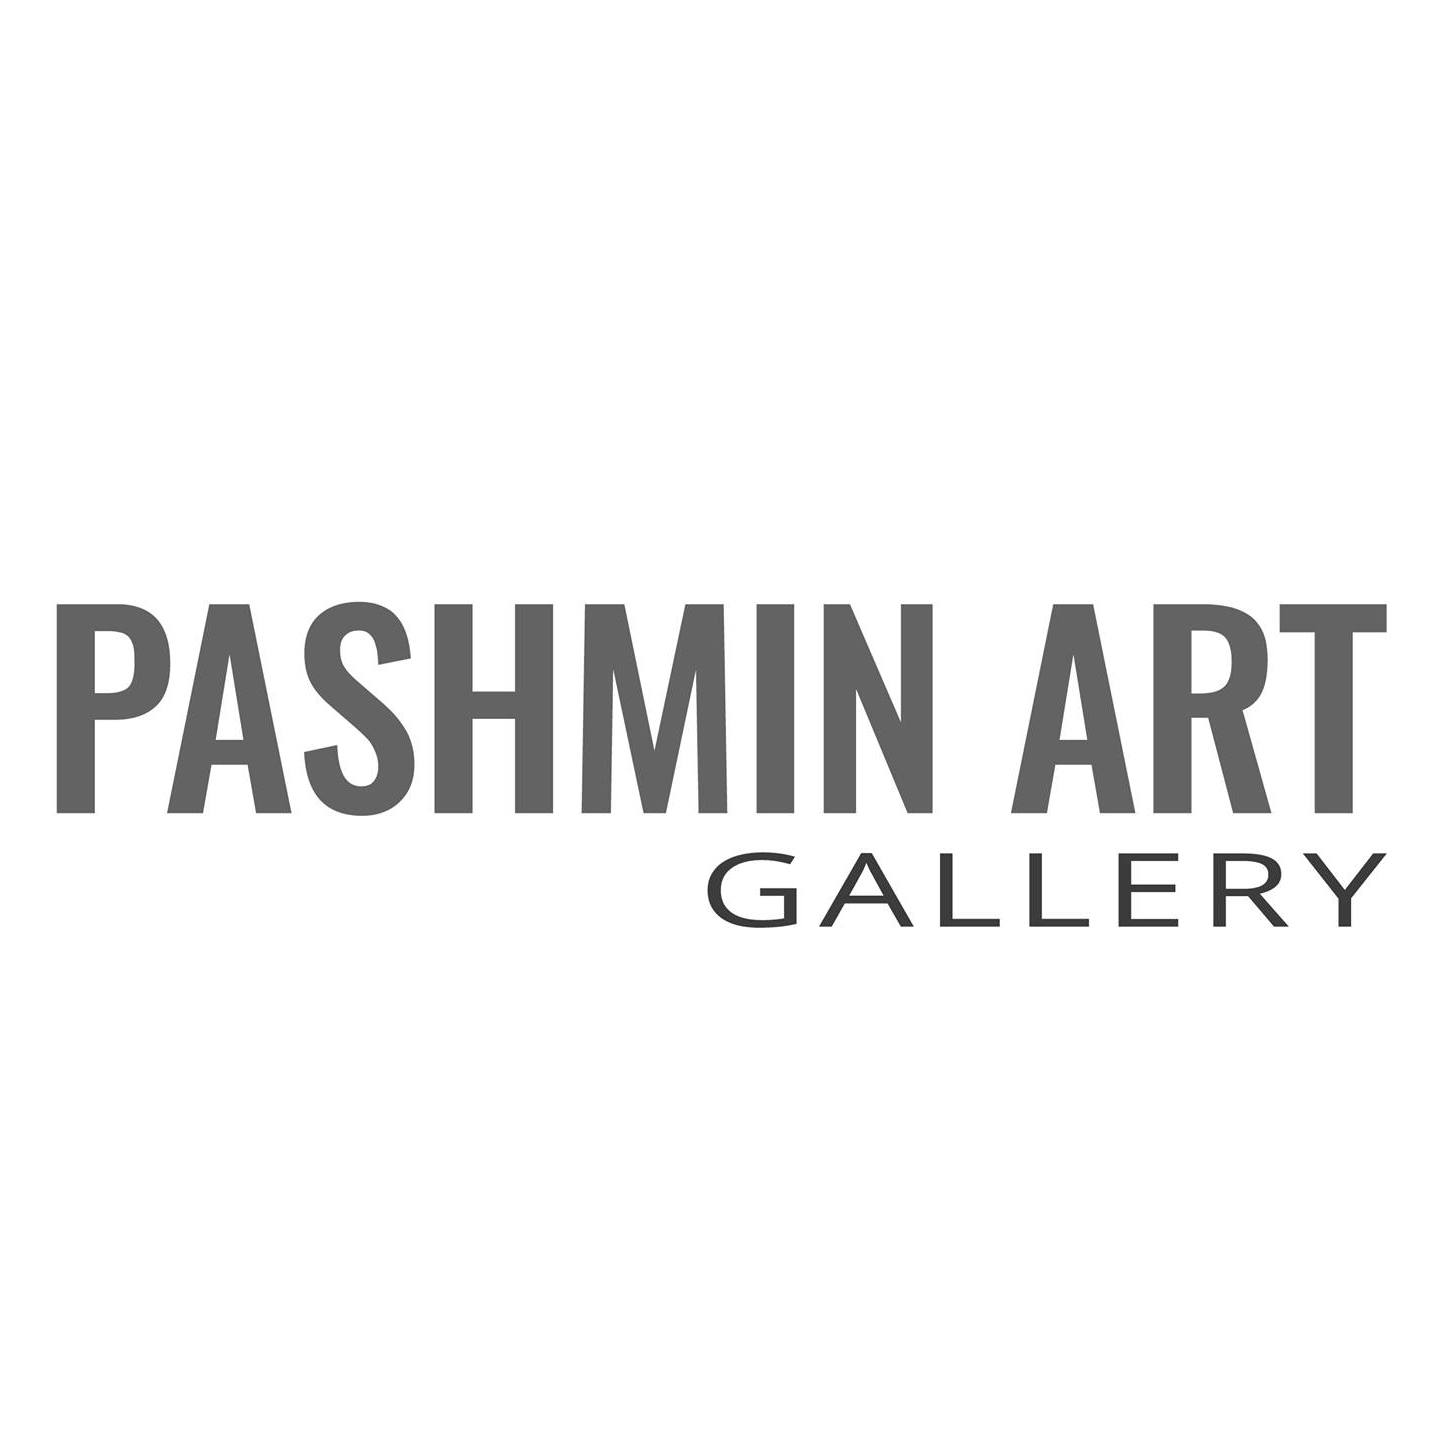 Pashmin Art Gallery